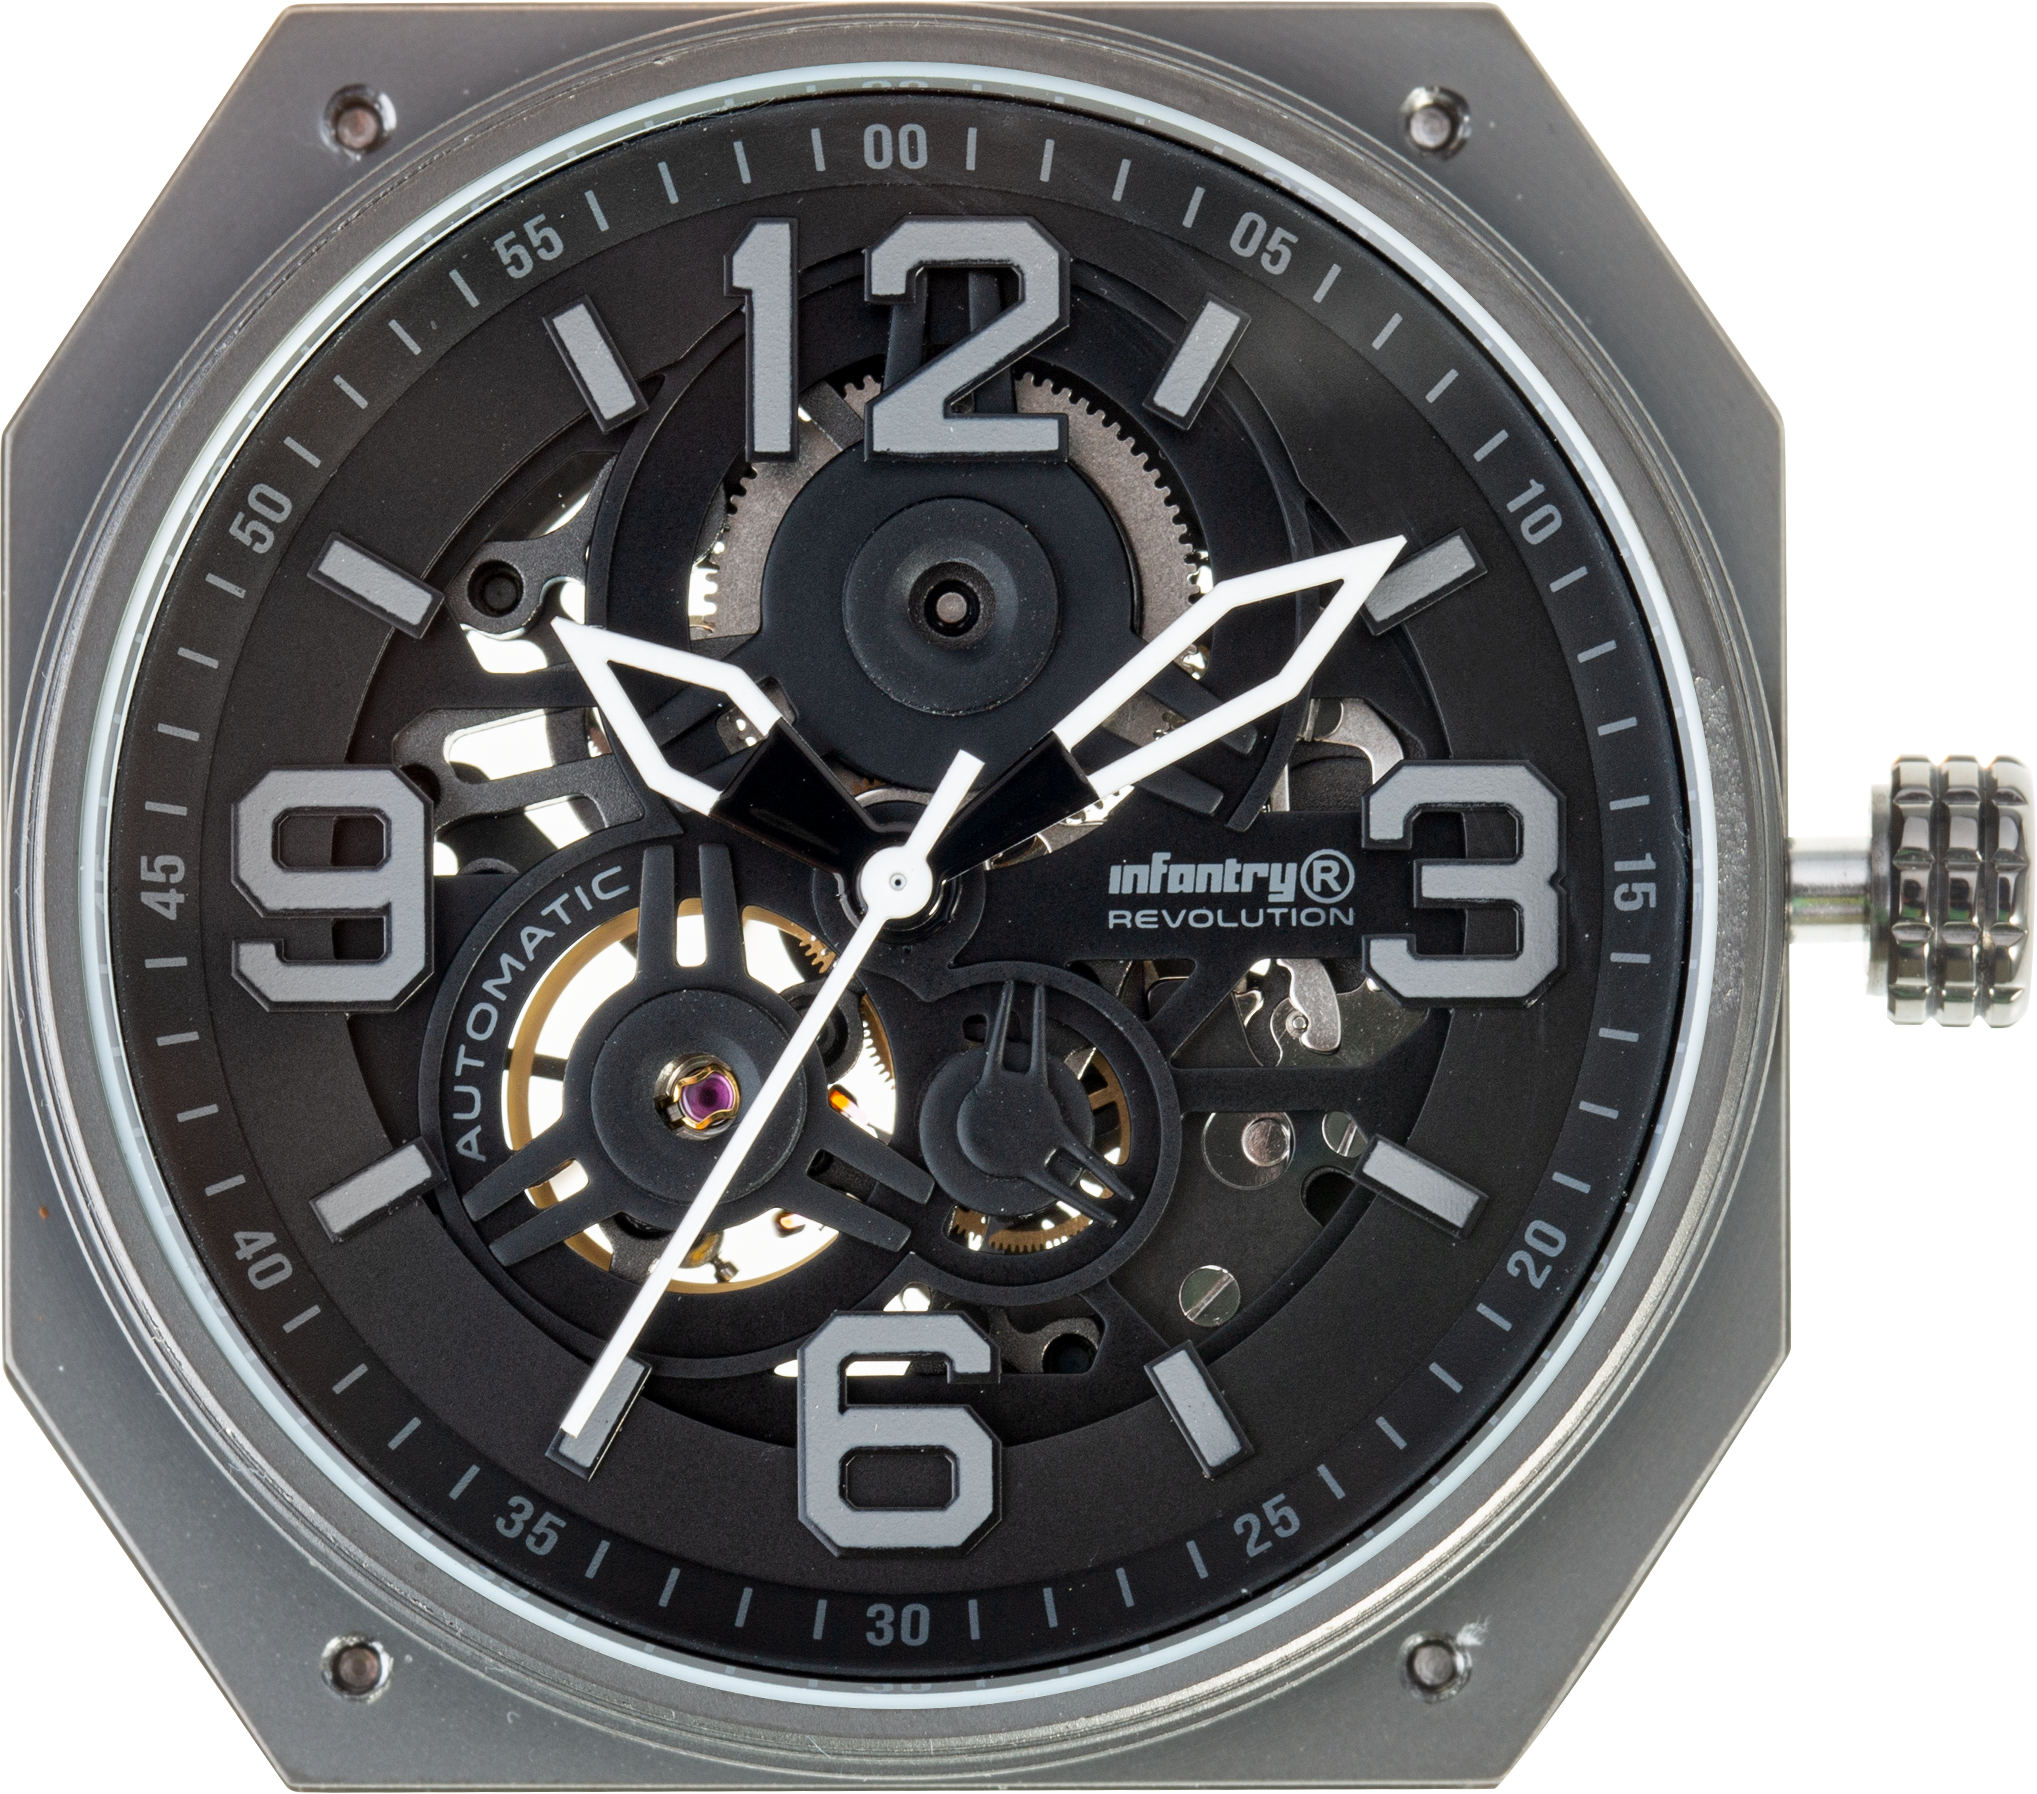 MOD 47 - watch movement - black-and-grey